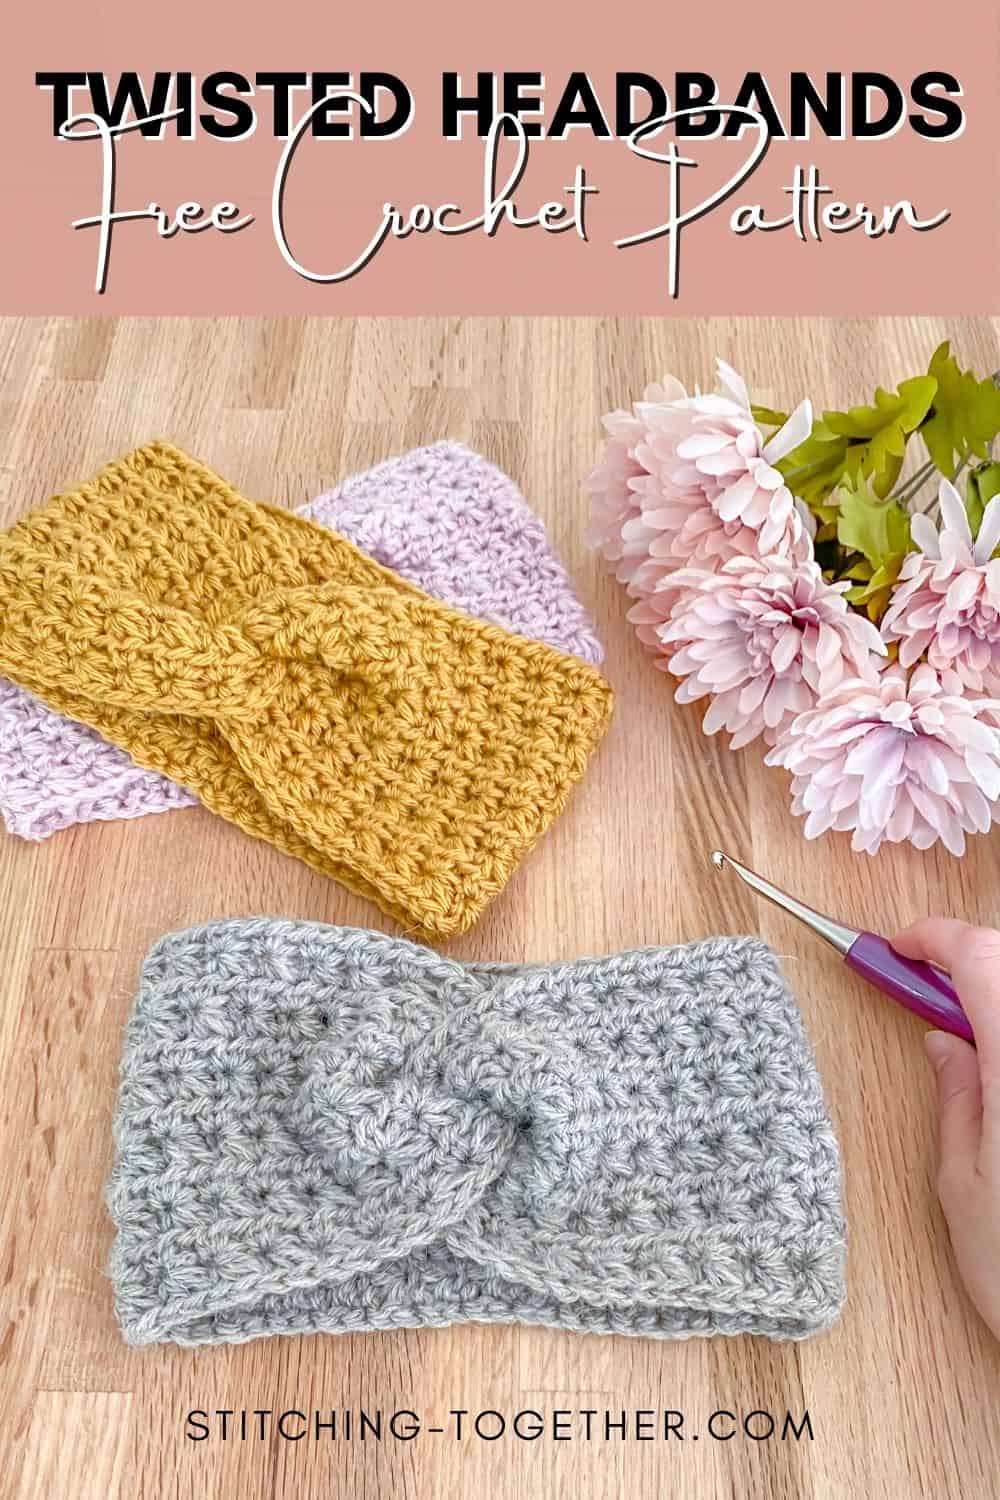 twist headbands crochet next to a hand holding a hook and flowers